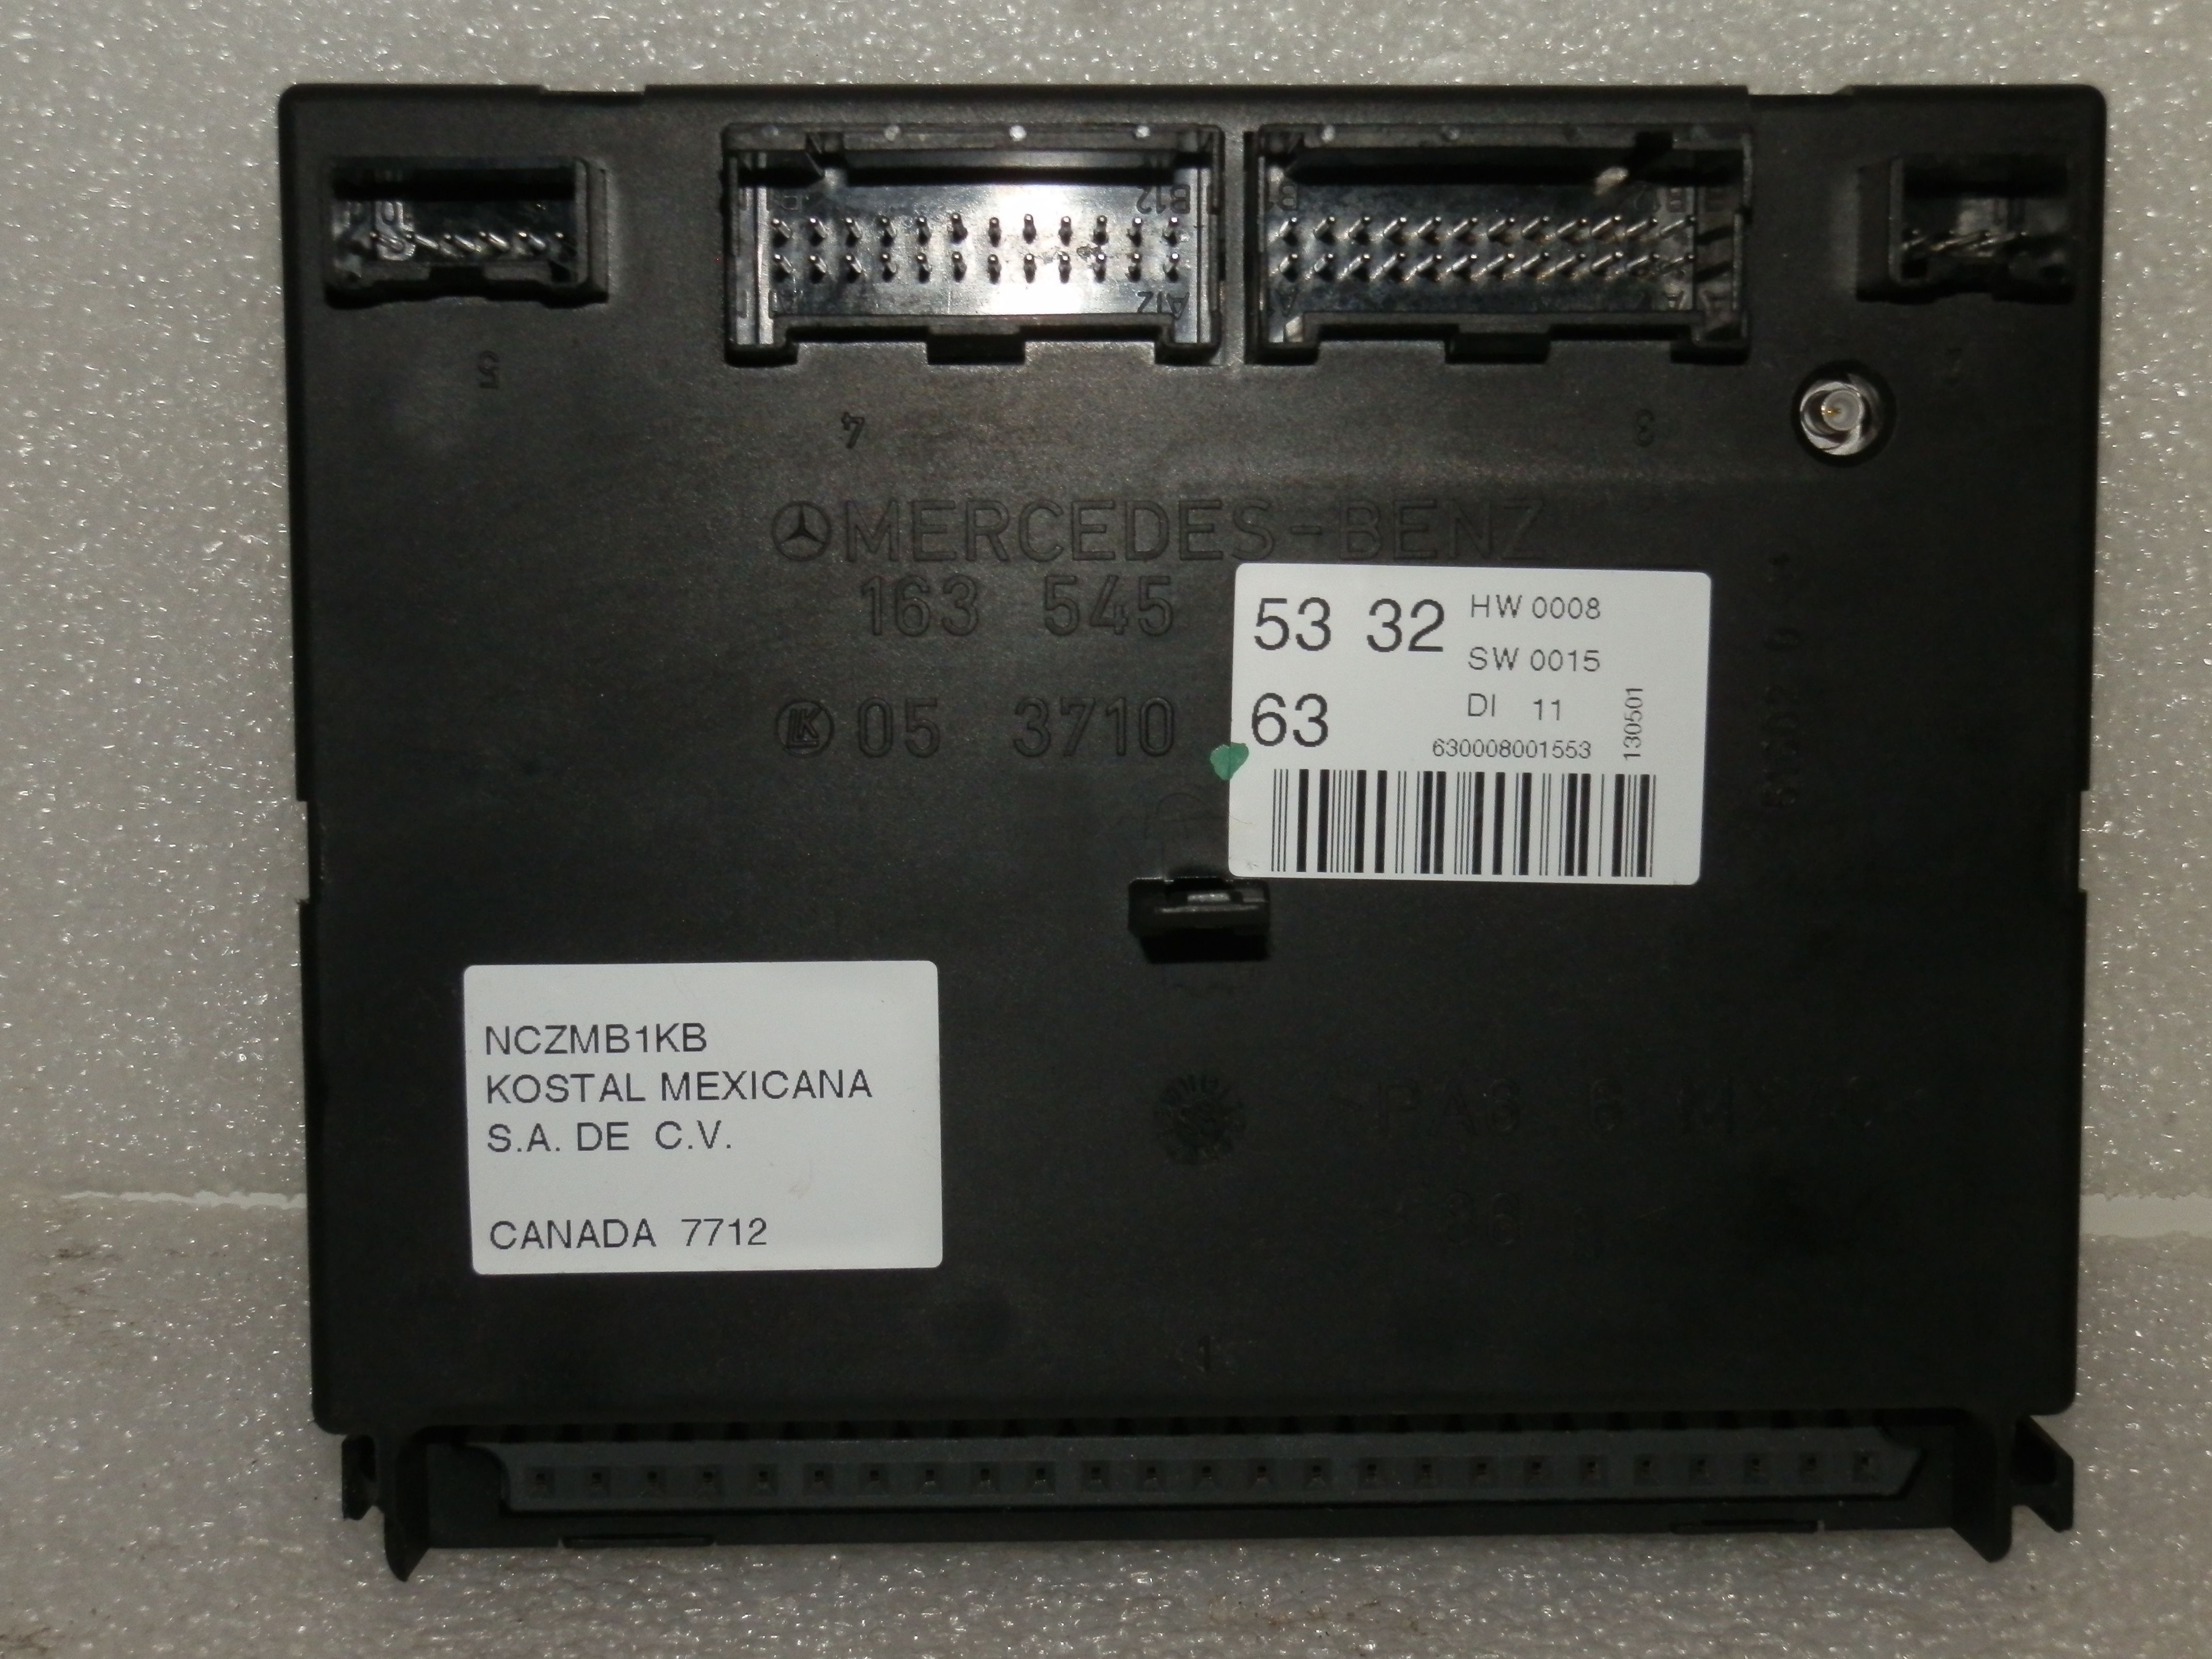   MERCEDES ML320 ML350 ML430 ML55 BCM W163 BODY CONTROL MODULE COMPUTER